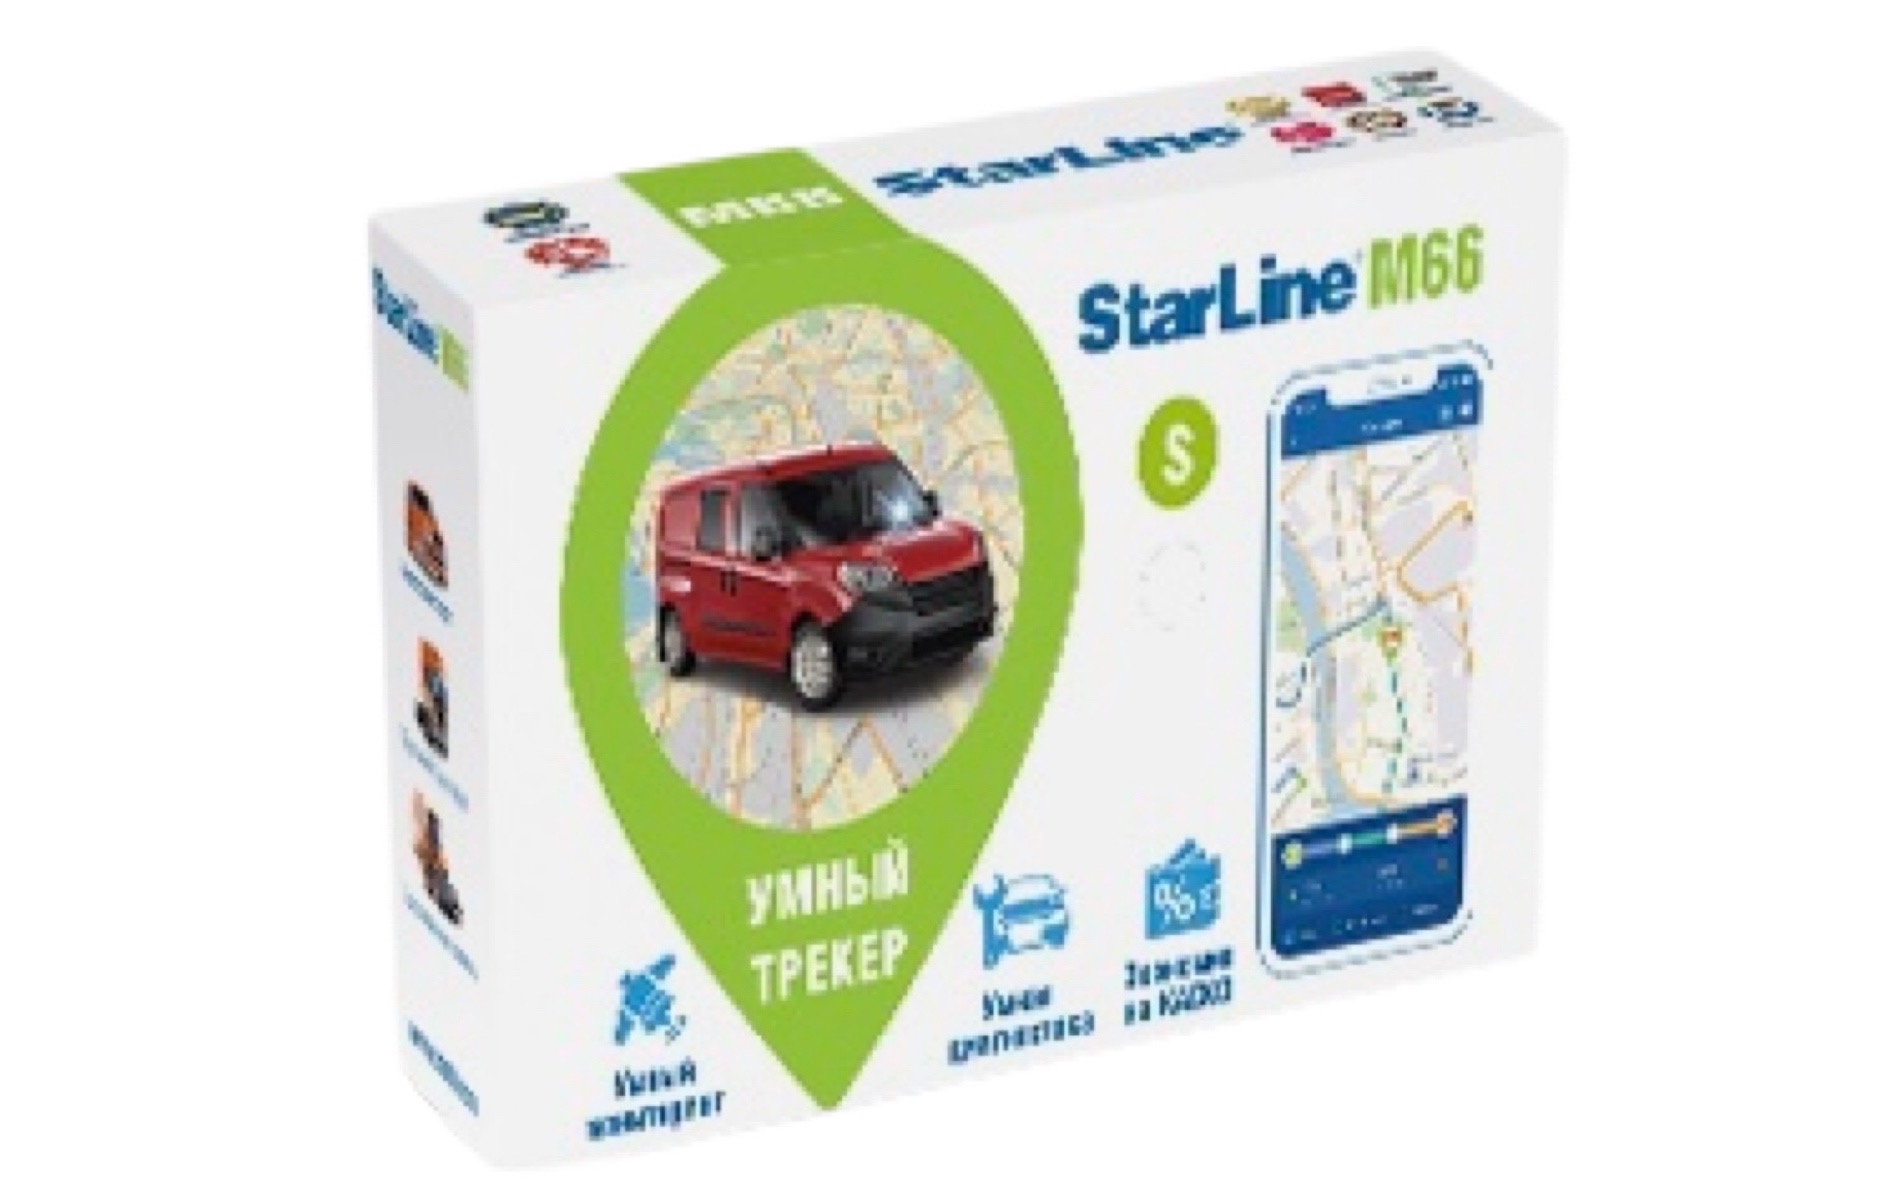 StarLine M66 S GPS-модули и поисковые маяки 